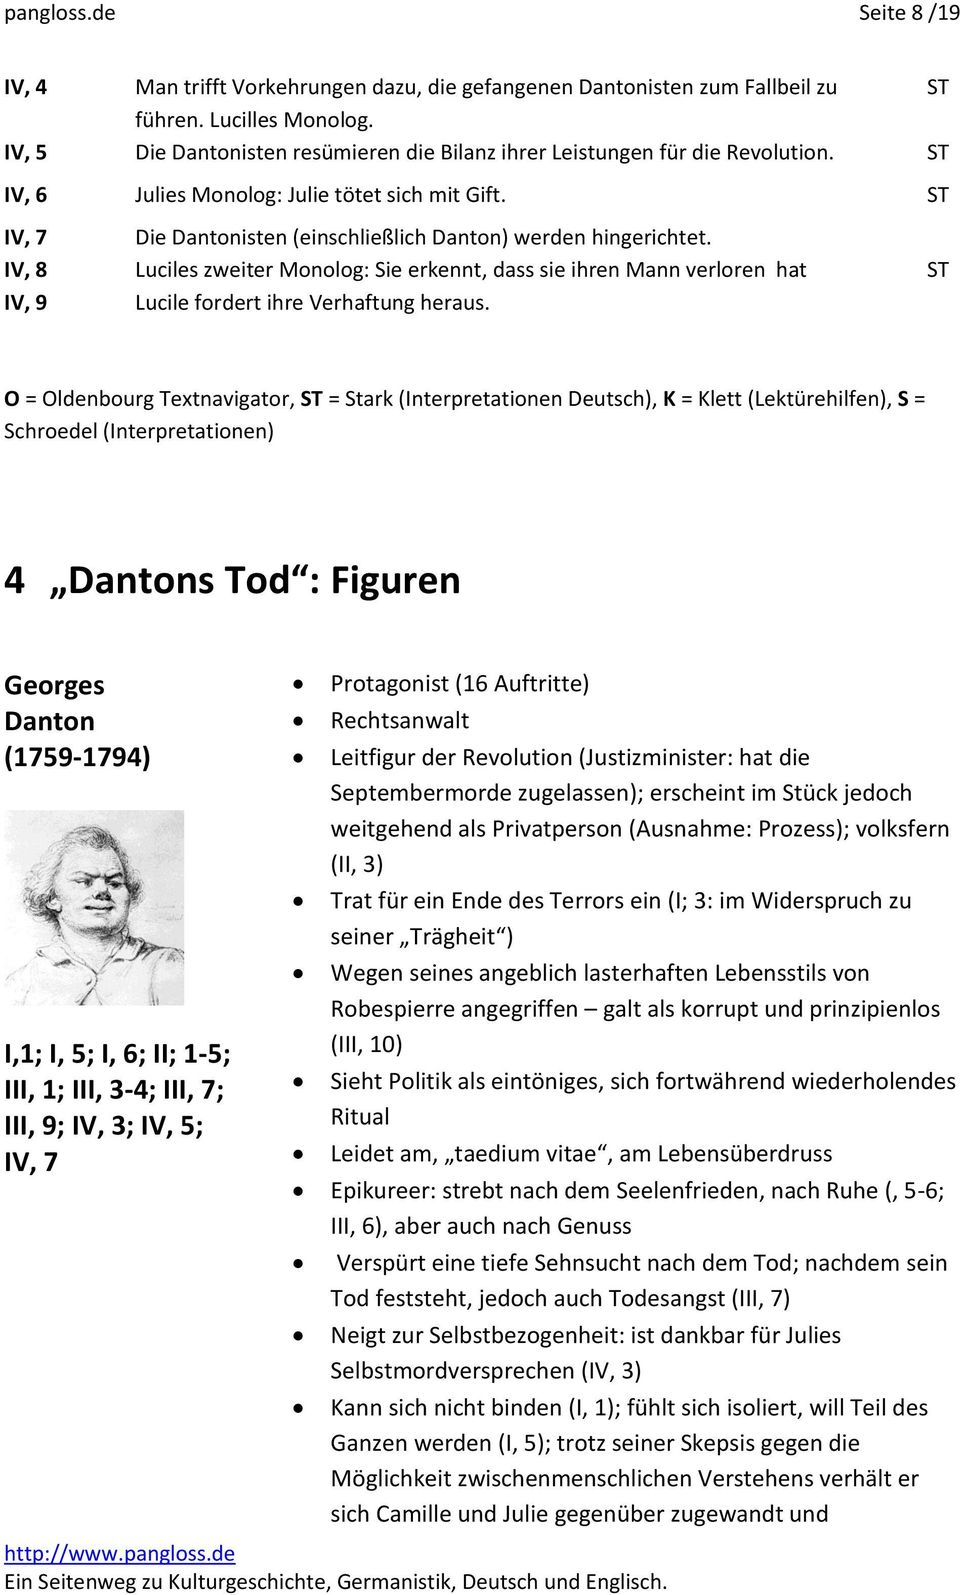 Georg Buchner Dantons Tod Pdf Kostenfreier Download